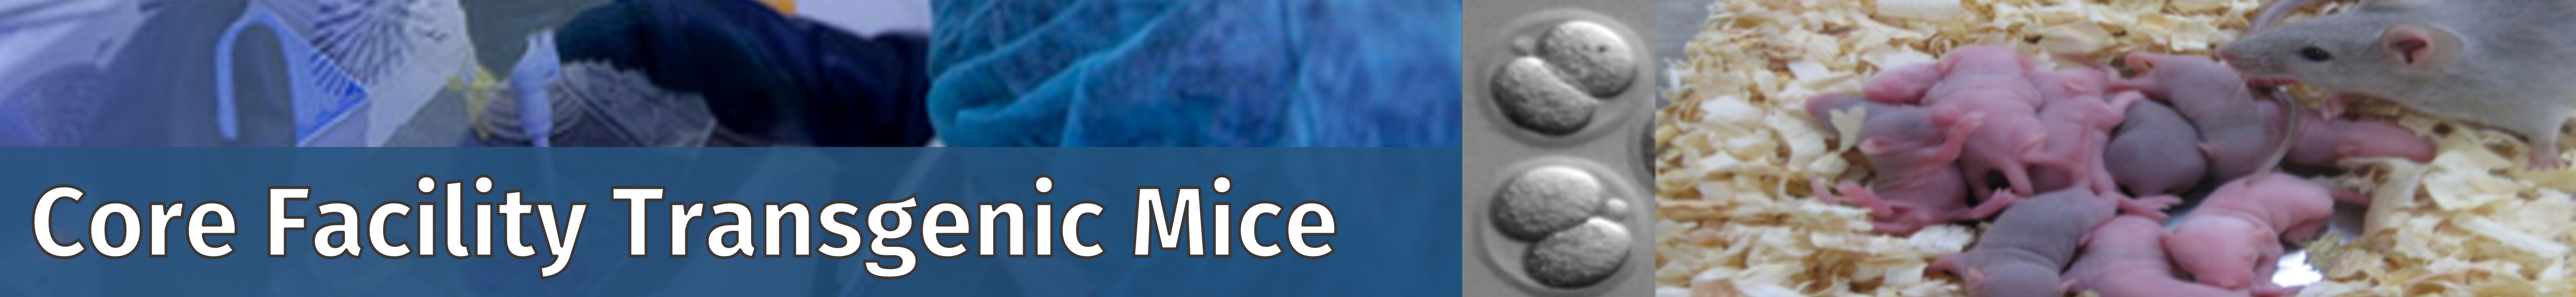 Bannertitel der CF Transgenic Mice